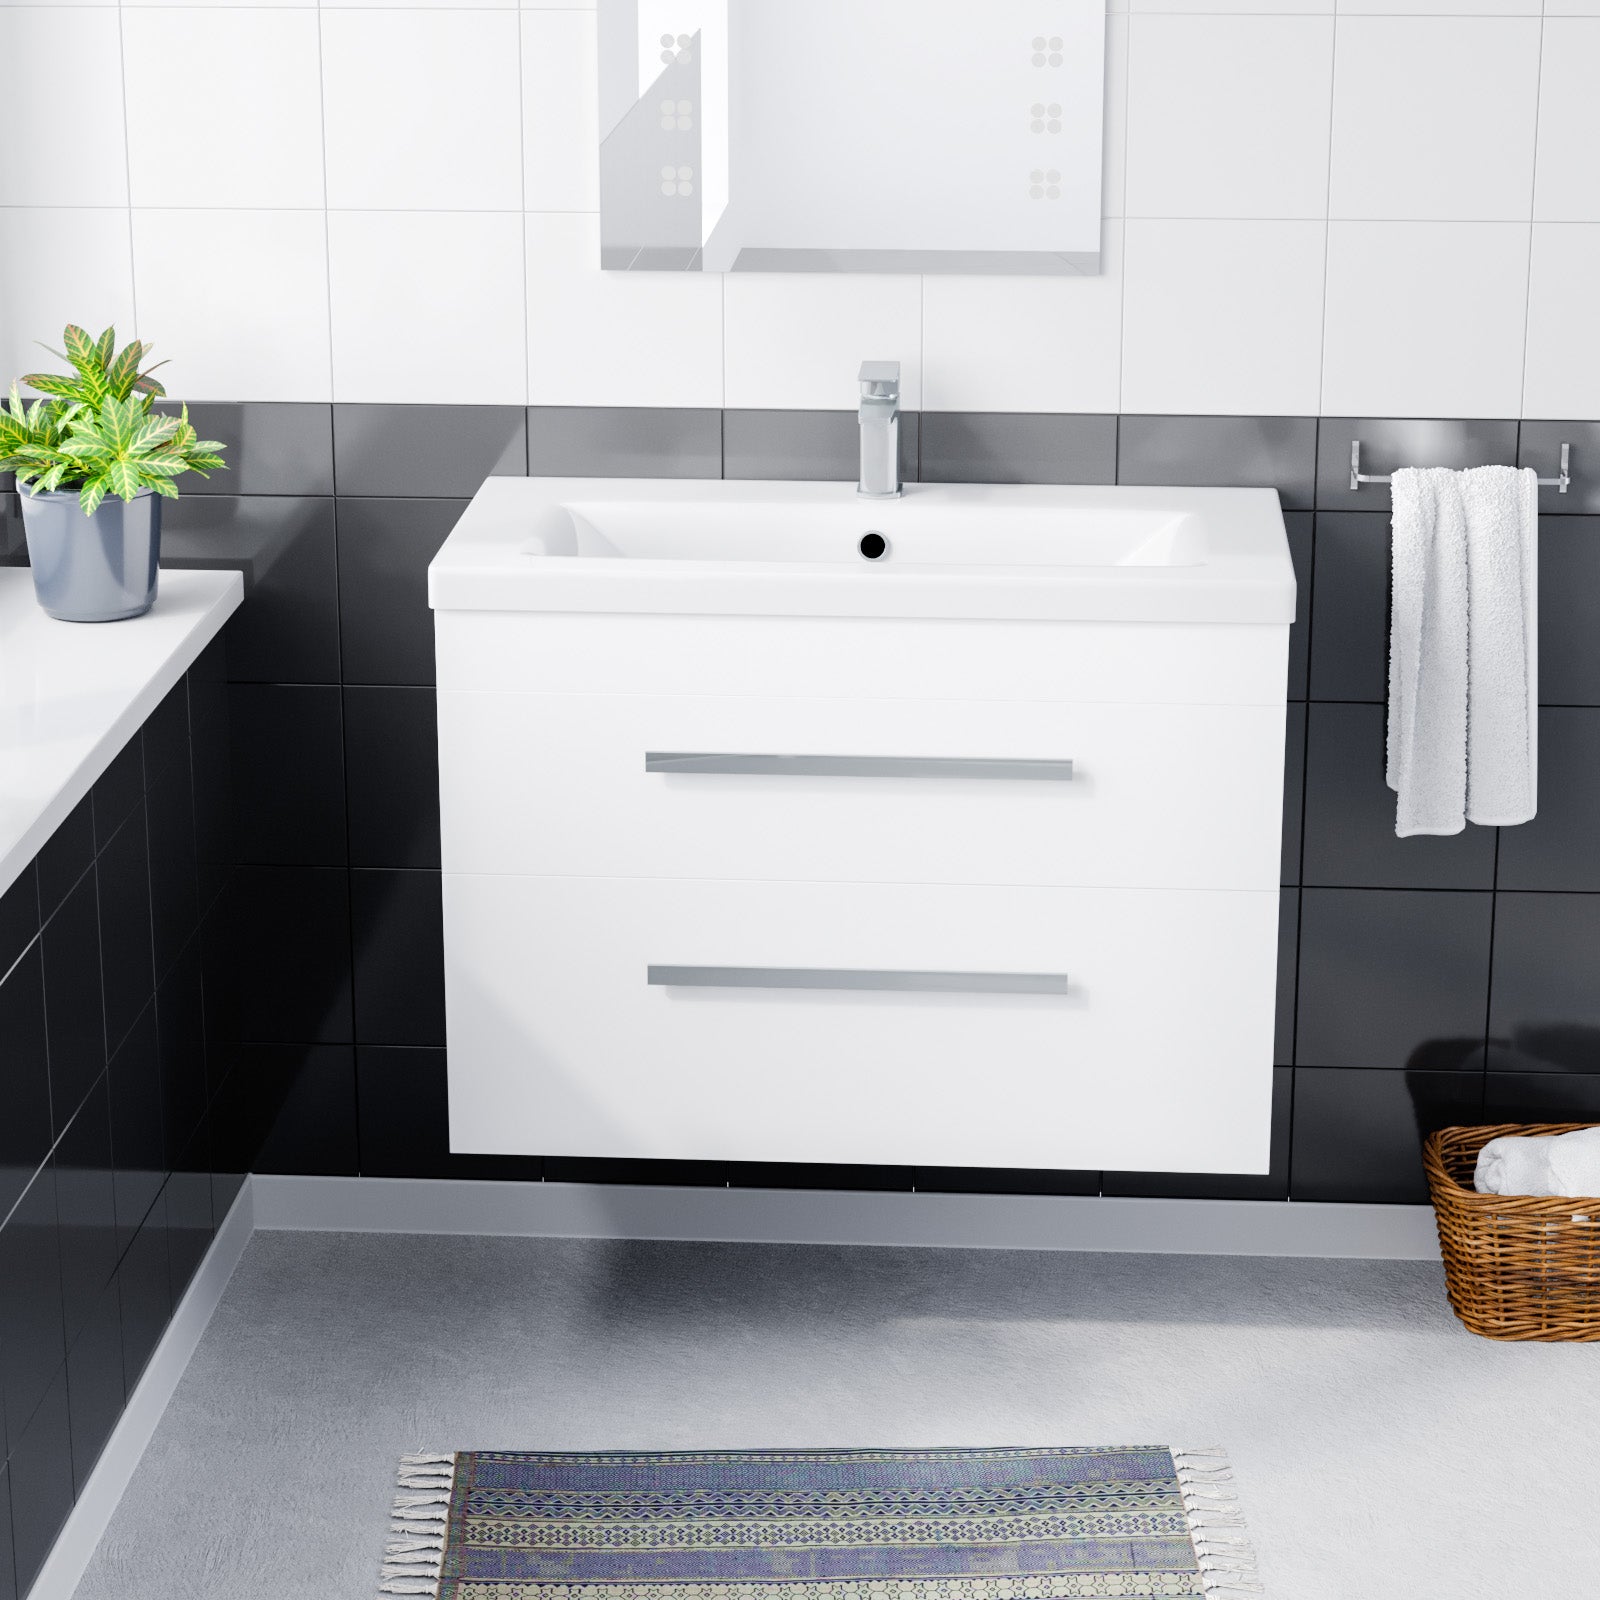 Nanuya 800mm Gloss White Wall Hung 2 Drawer Vanity Cabinet & Ceramic Basin Sink